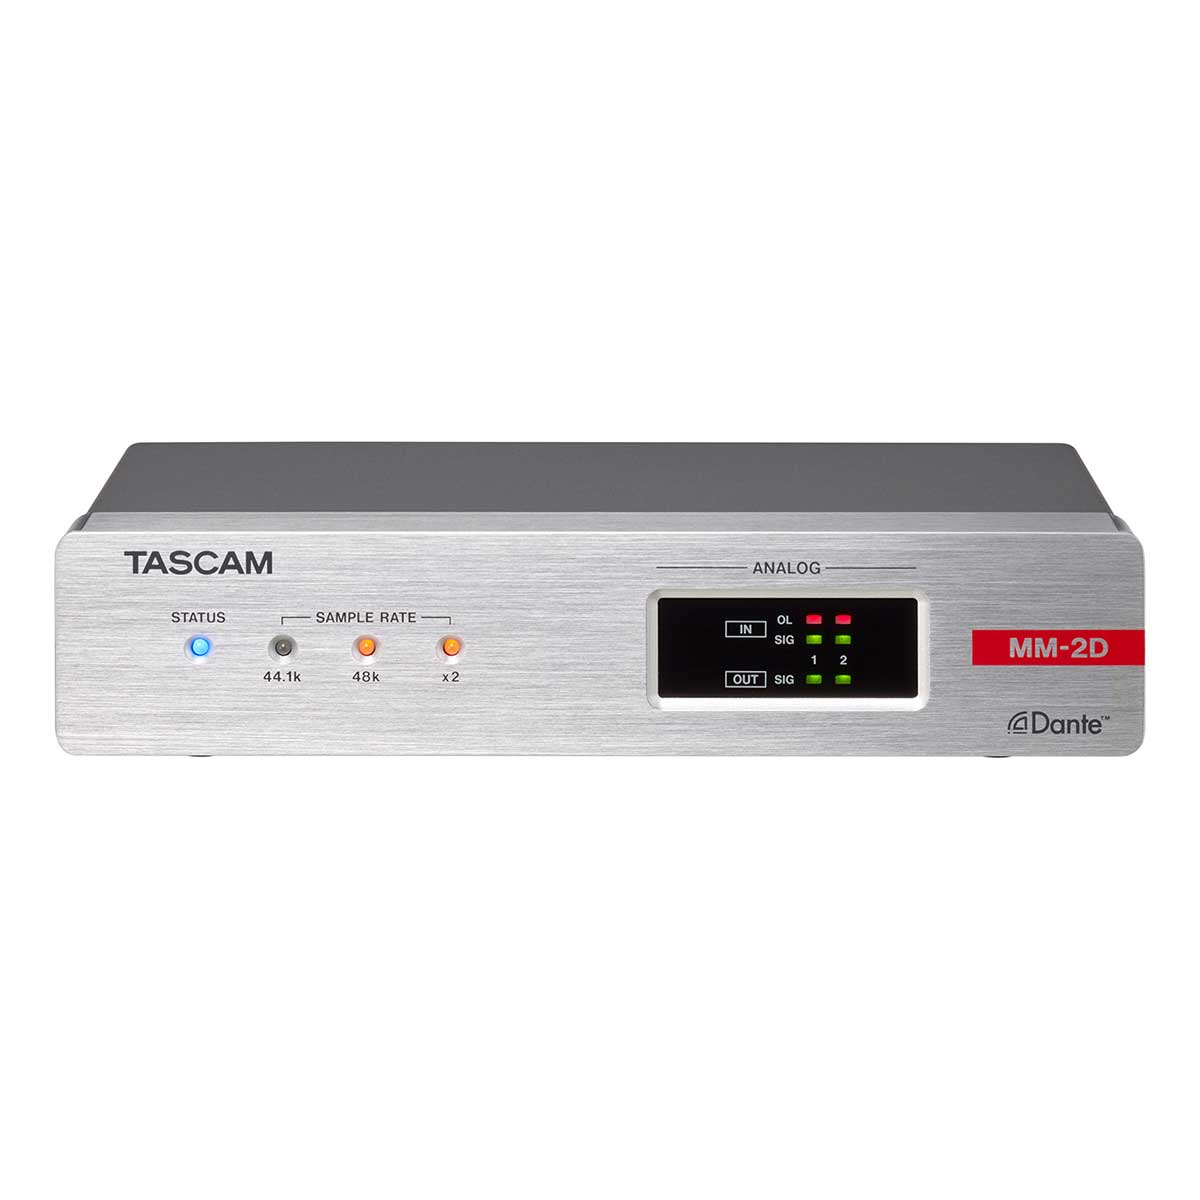 TASCAM MM-2D-X Built-in DSP 2 mic/line input / 2 line output Dante converter